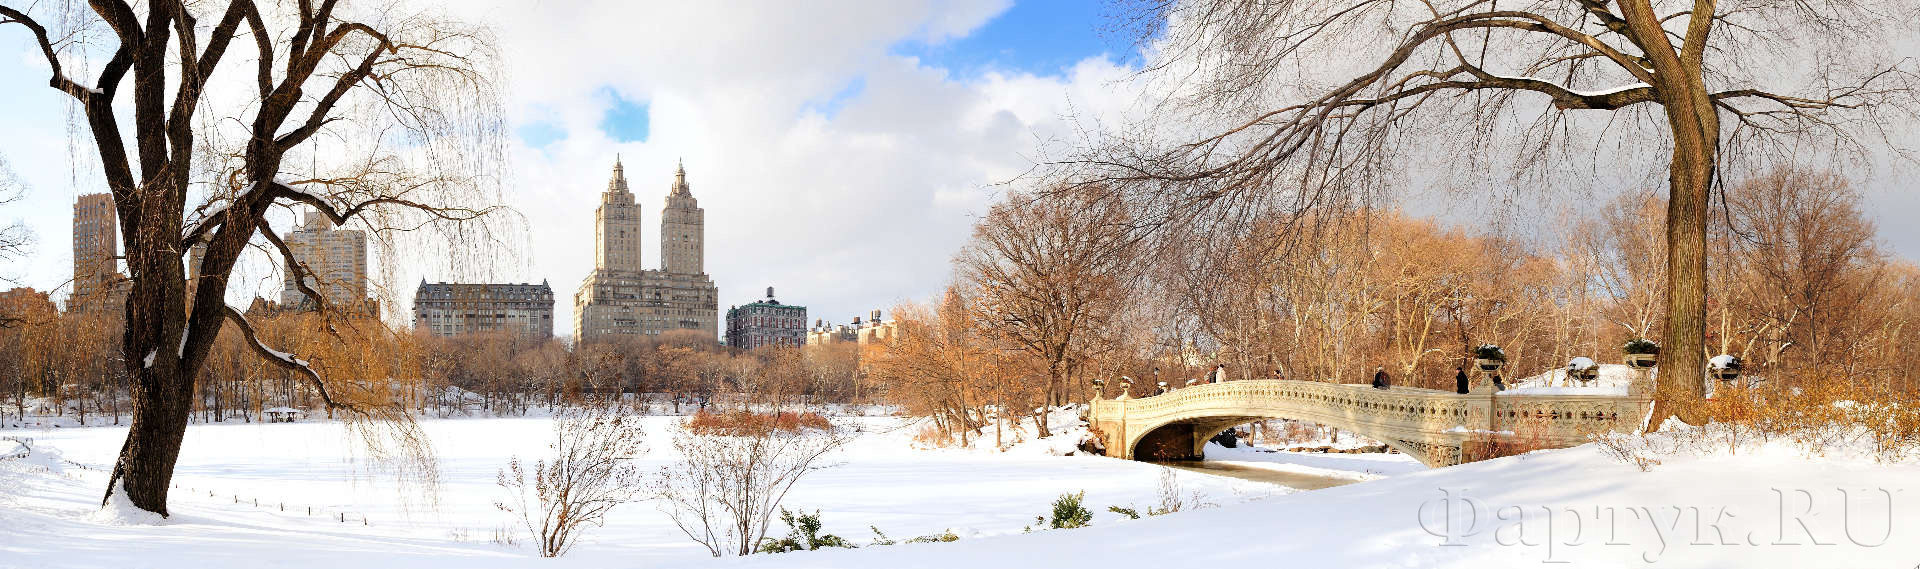 Центральный парк зимой, Нью-Йорк